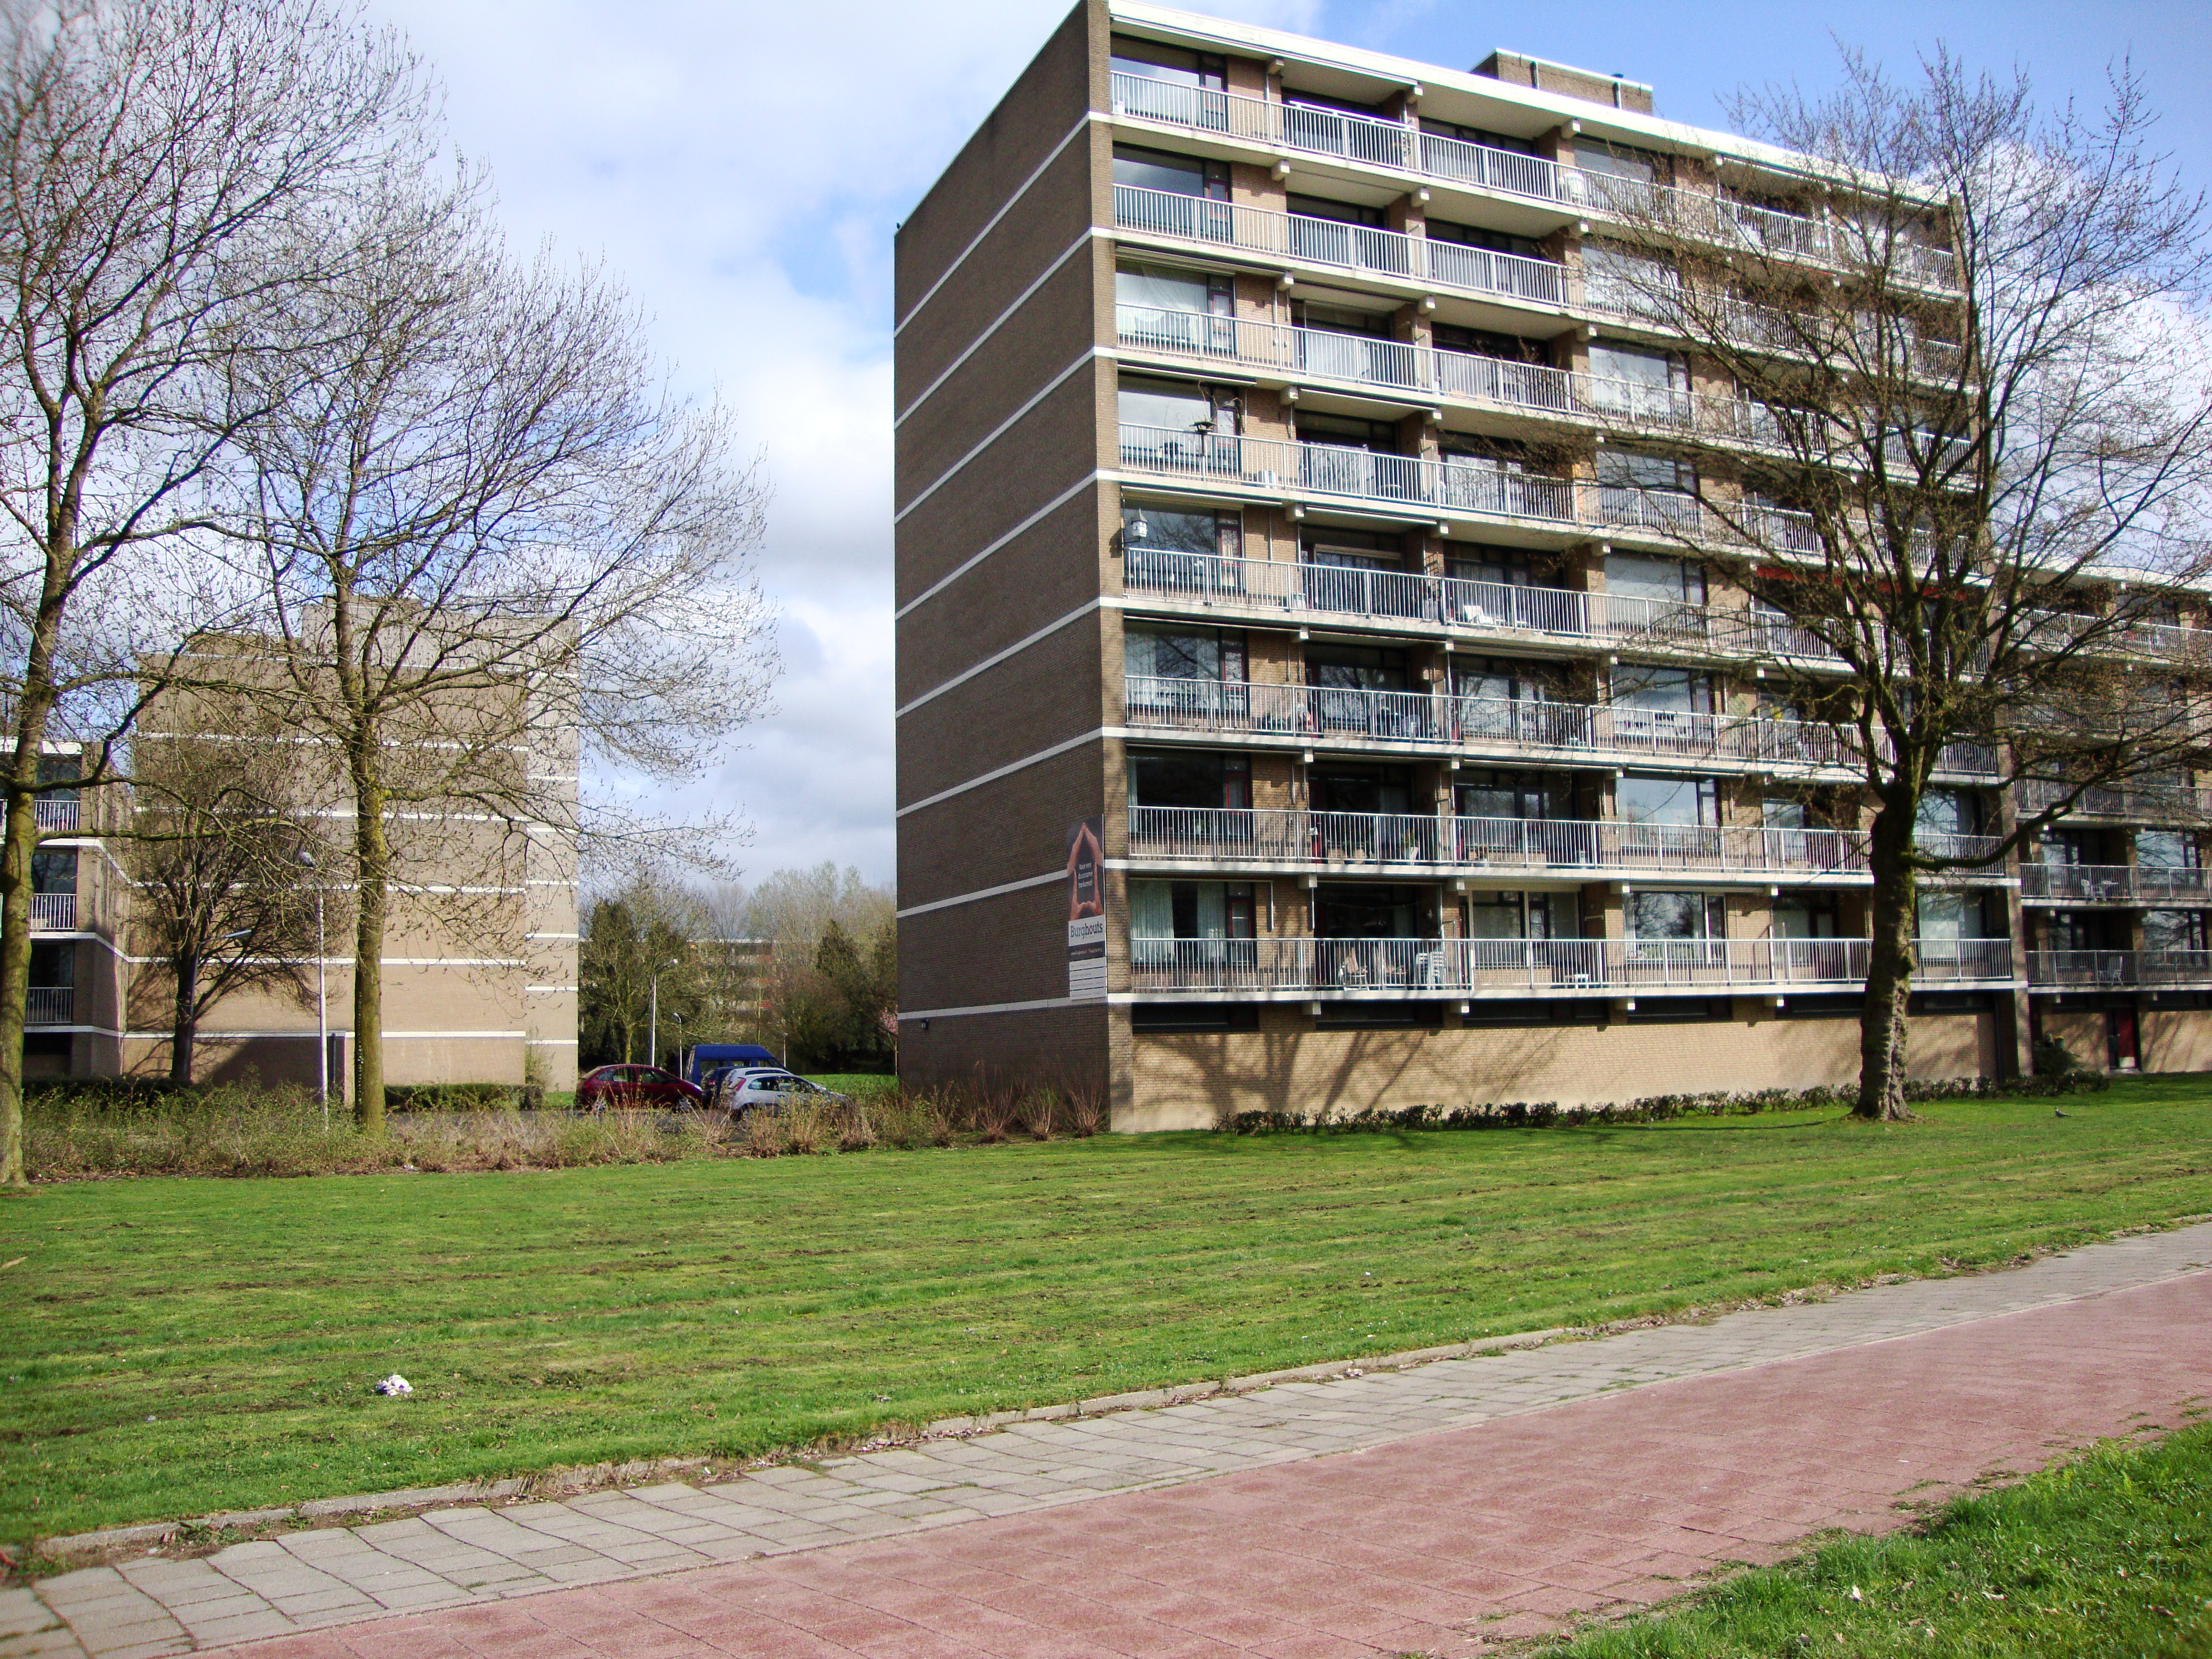 lied leren lastig File:Nijmegen Dukenburg, hoogbouw Malvert.JPG - Wikimedia Commons